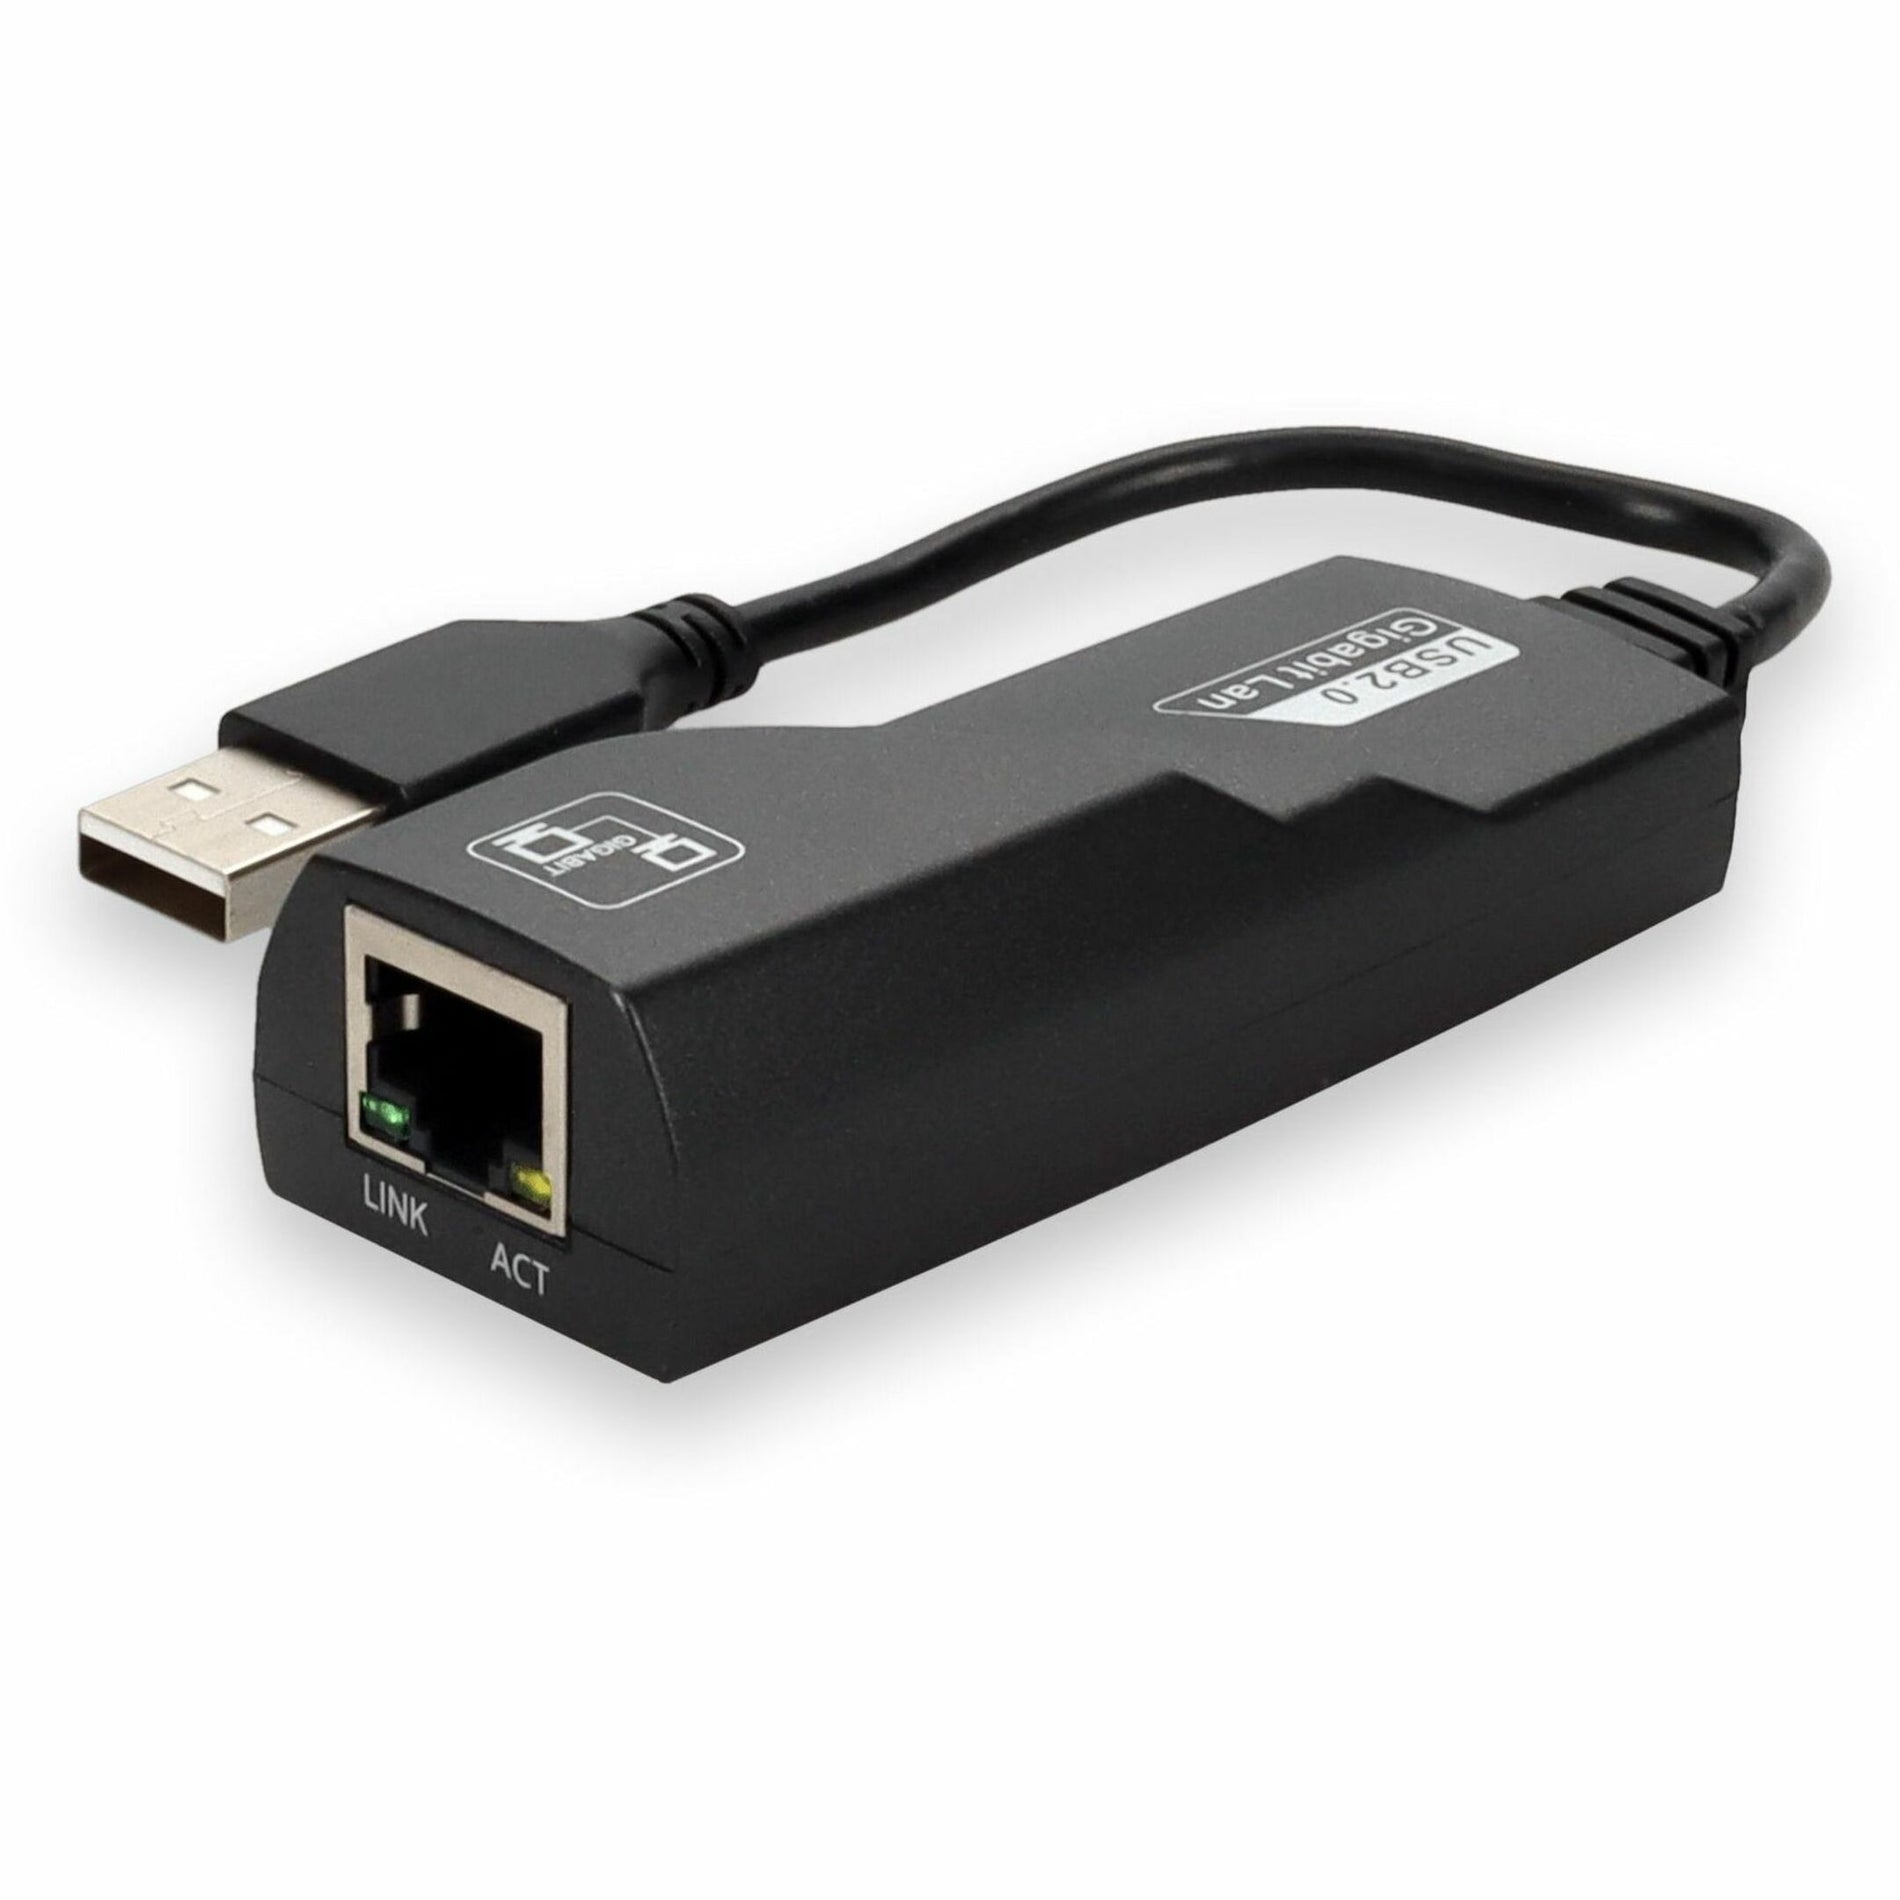 AddonUSB 2.0 (A) Mâle to RJ-45 Femelle Gris & Noir Adaptateur (USB2NIC)